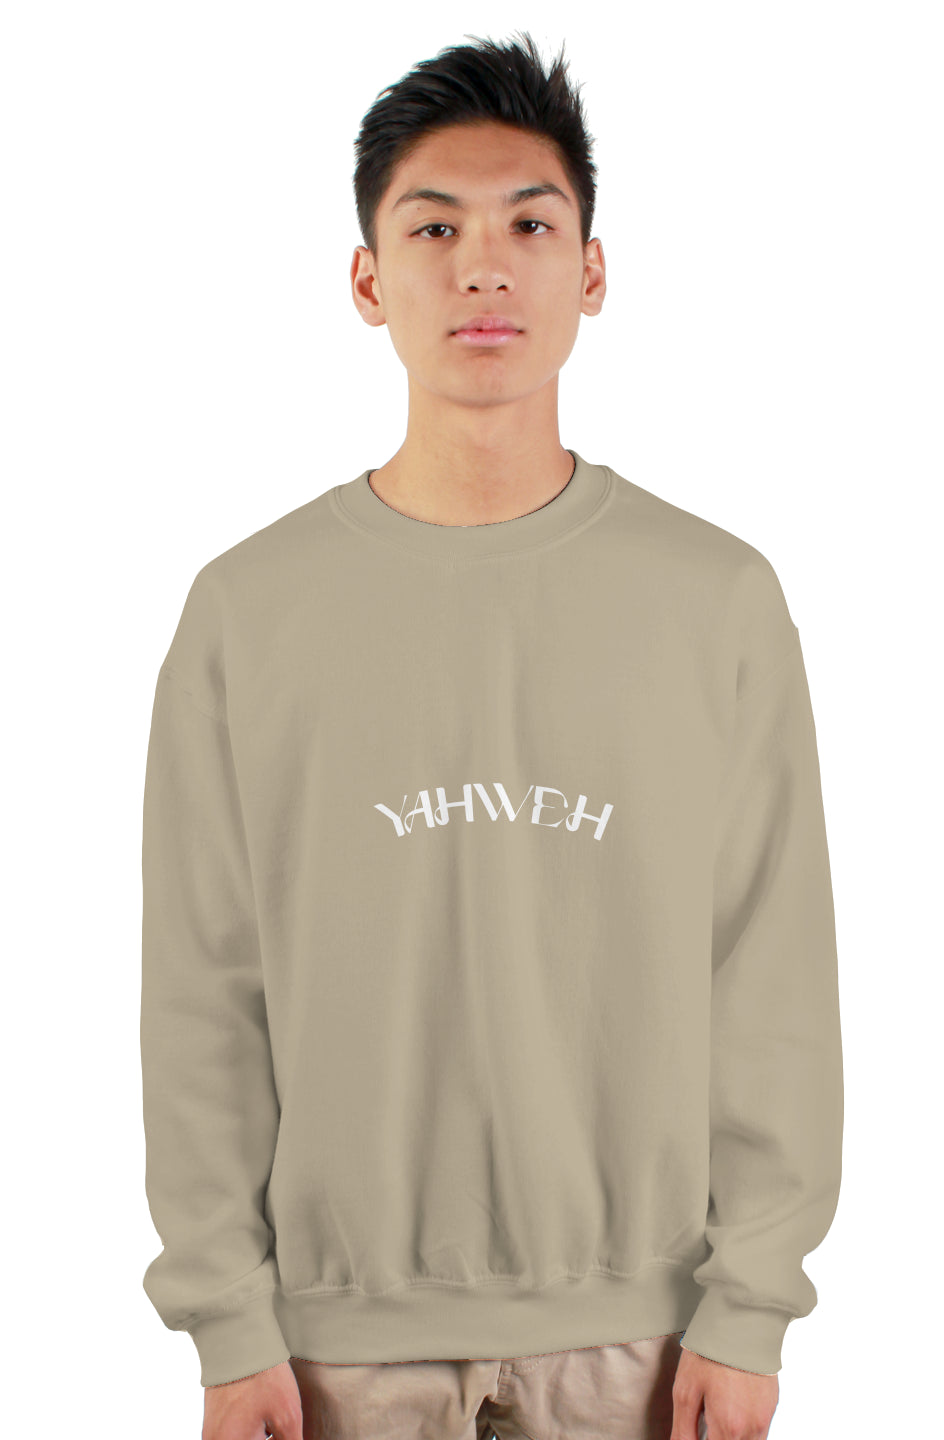 Yahweh heavy crewneck sweatshirt